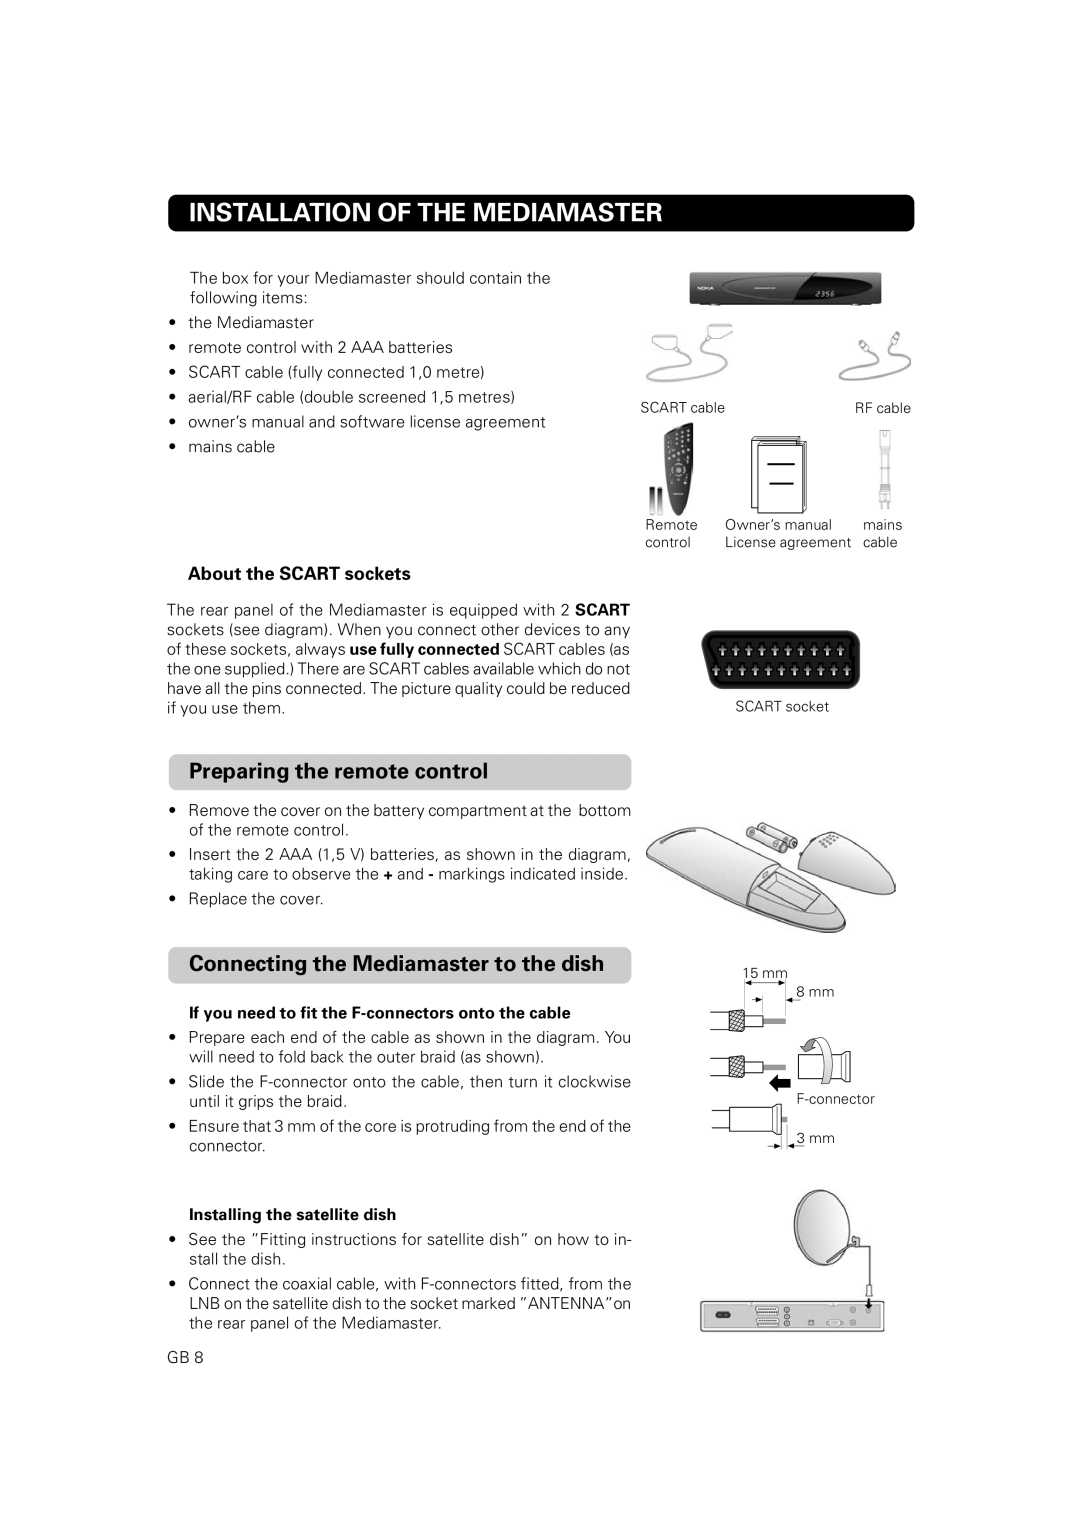 Nokia 9802 S Installation Of The Mediamaster, Preparing the remote control, Connecting the Mediamaster to the dish 